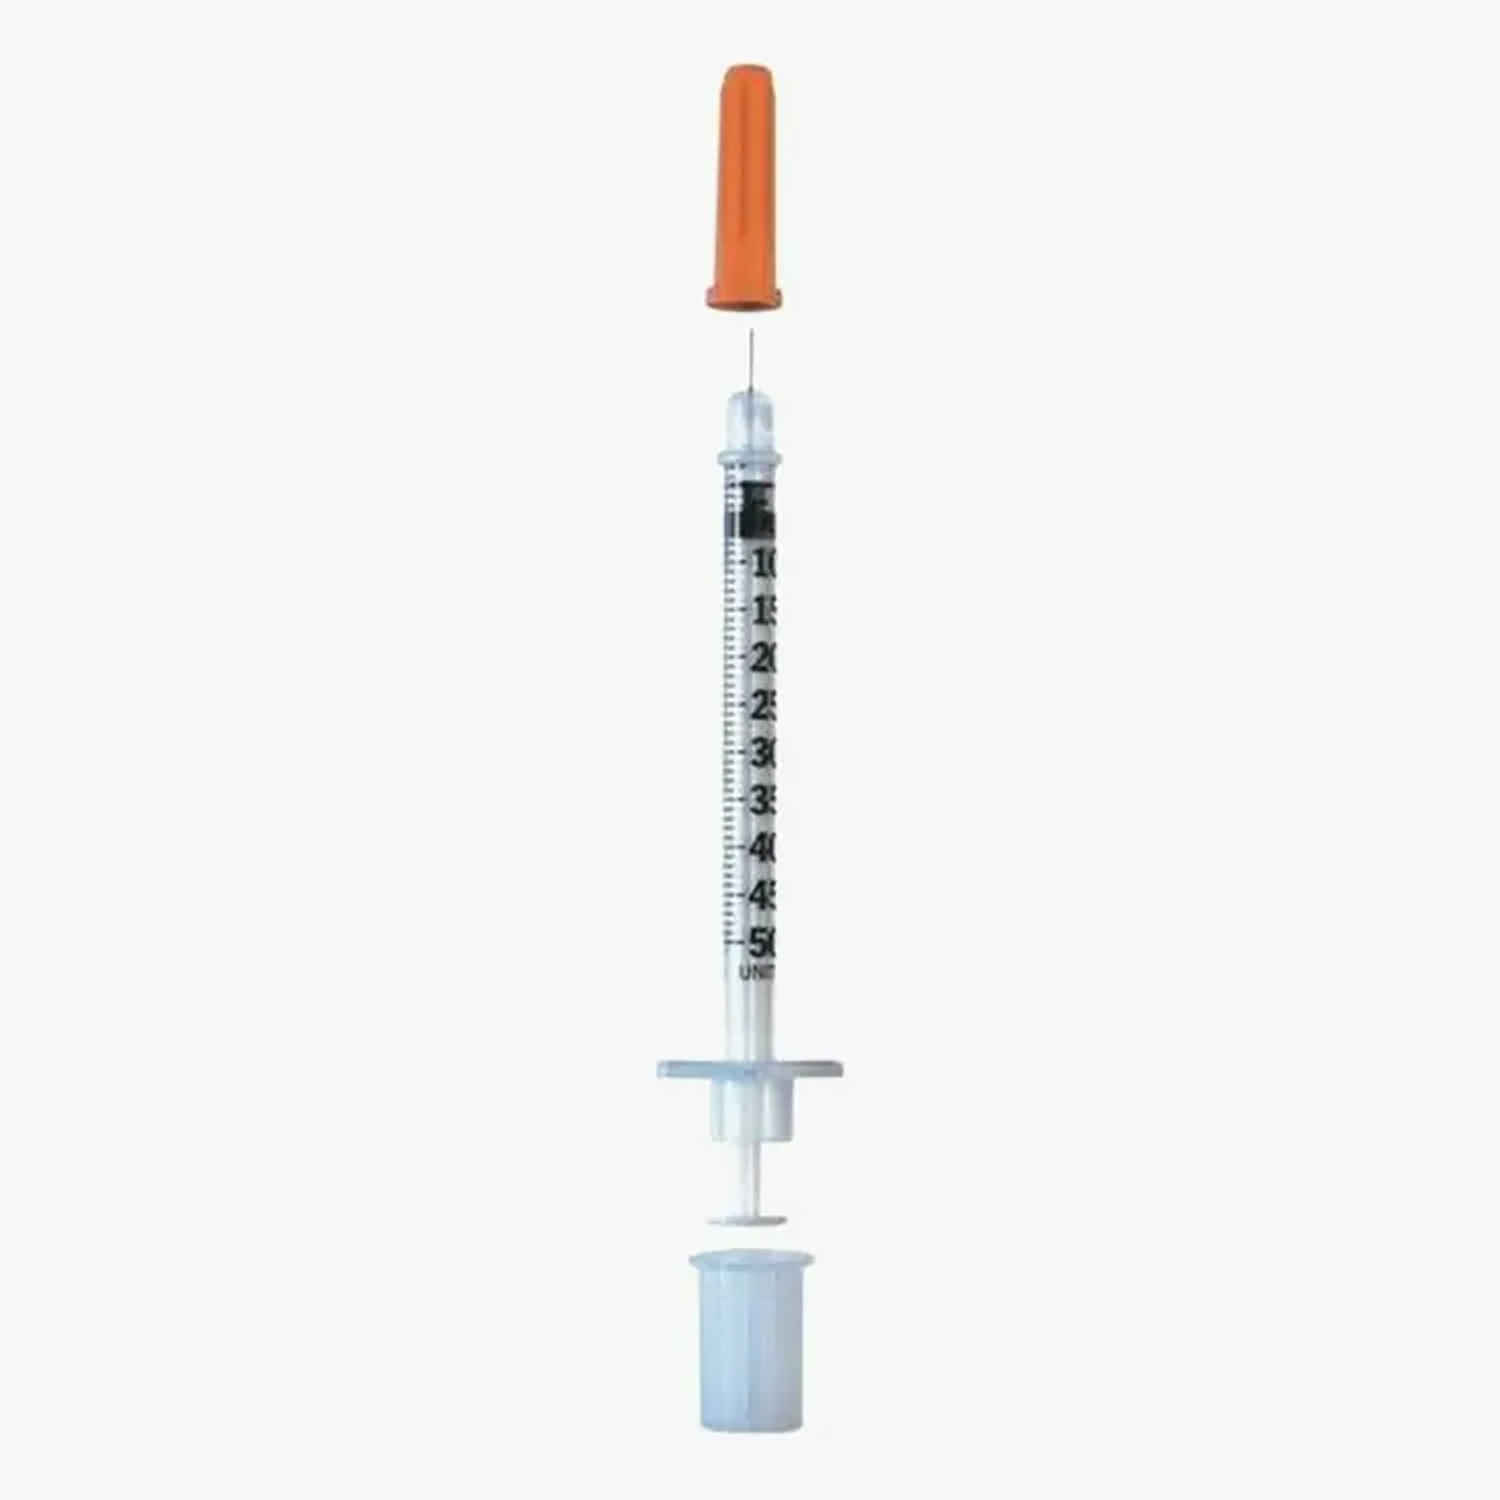 BD Microfine Insulin Syringe | 29G x 0.5ml | Pack of 200